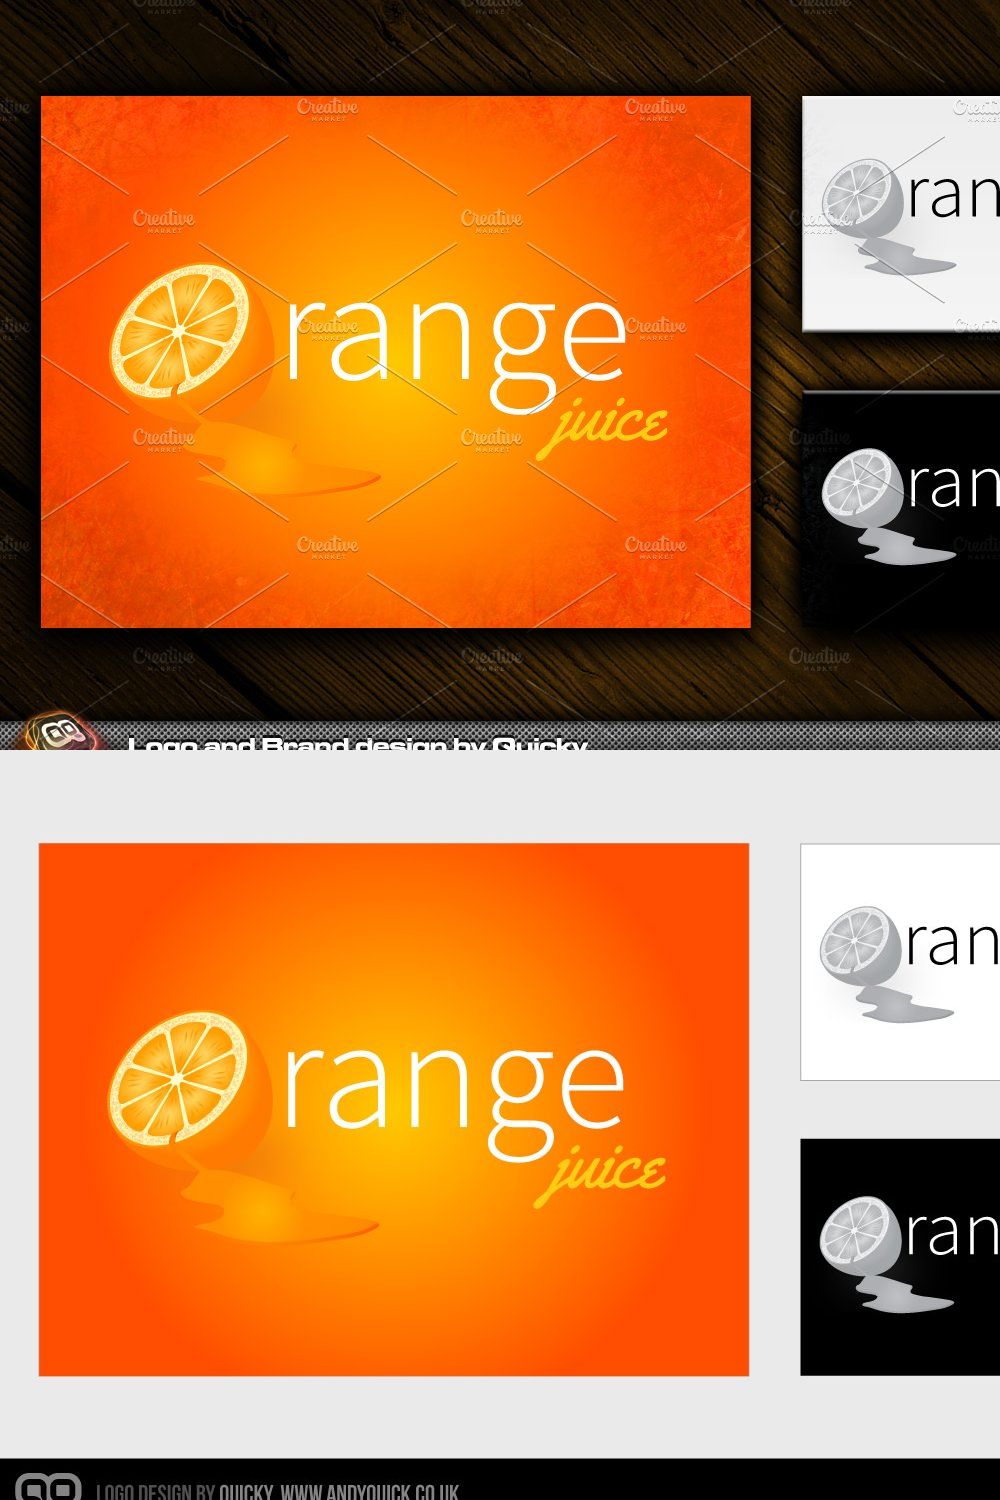 Orange Juice pinterest preview image.